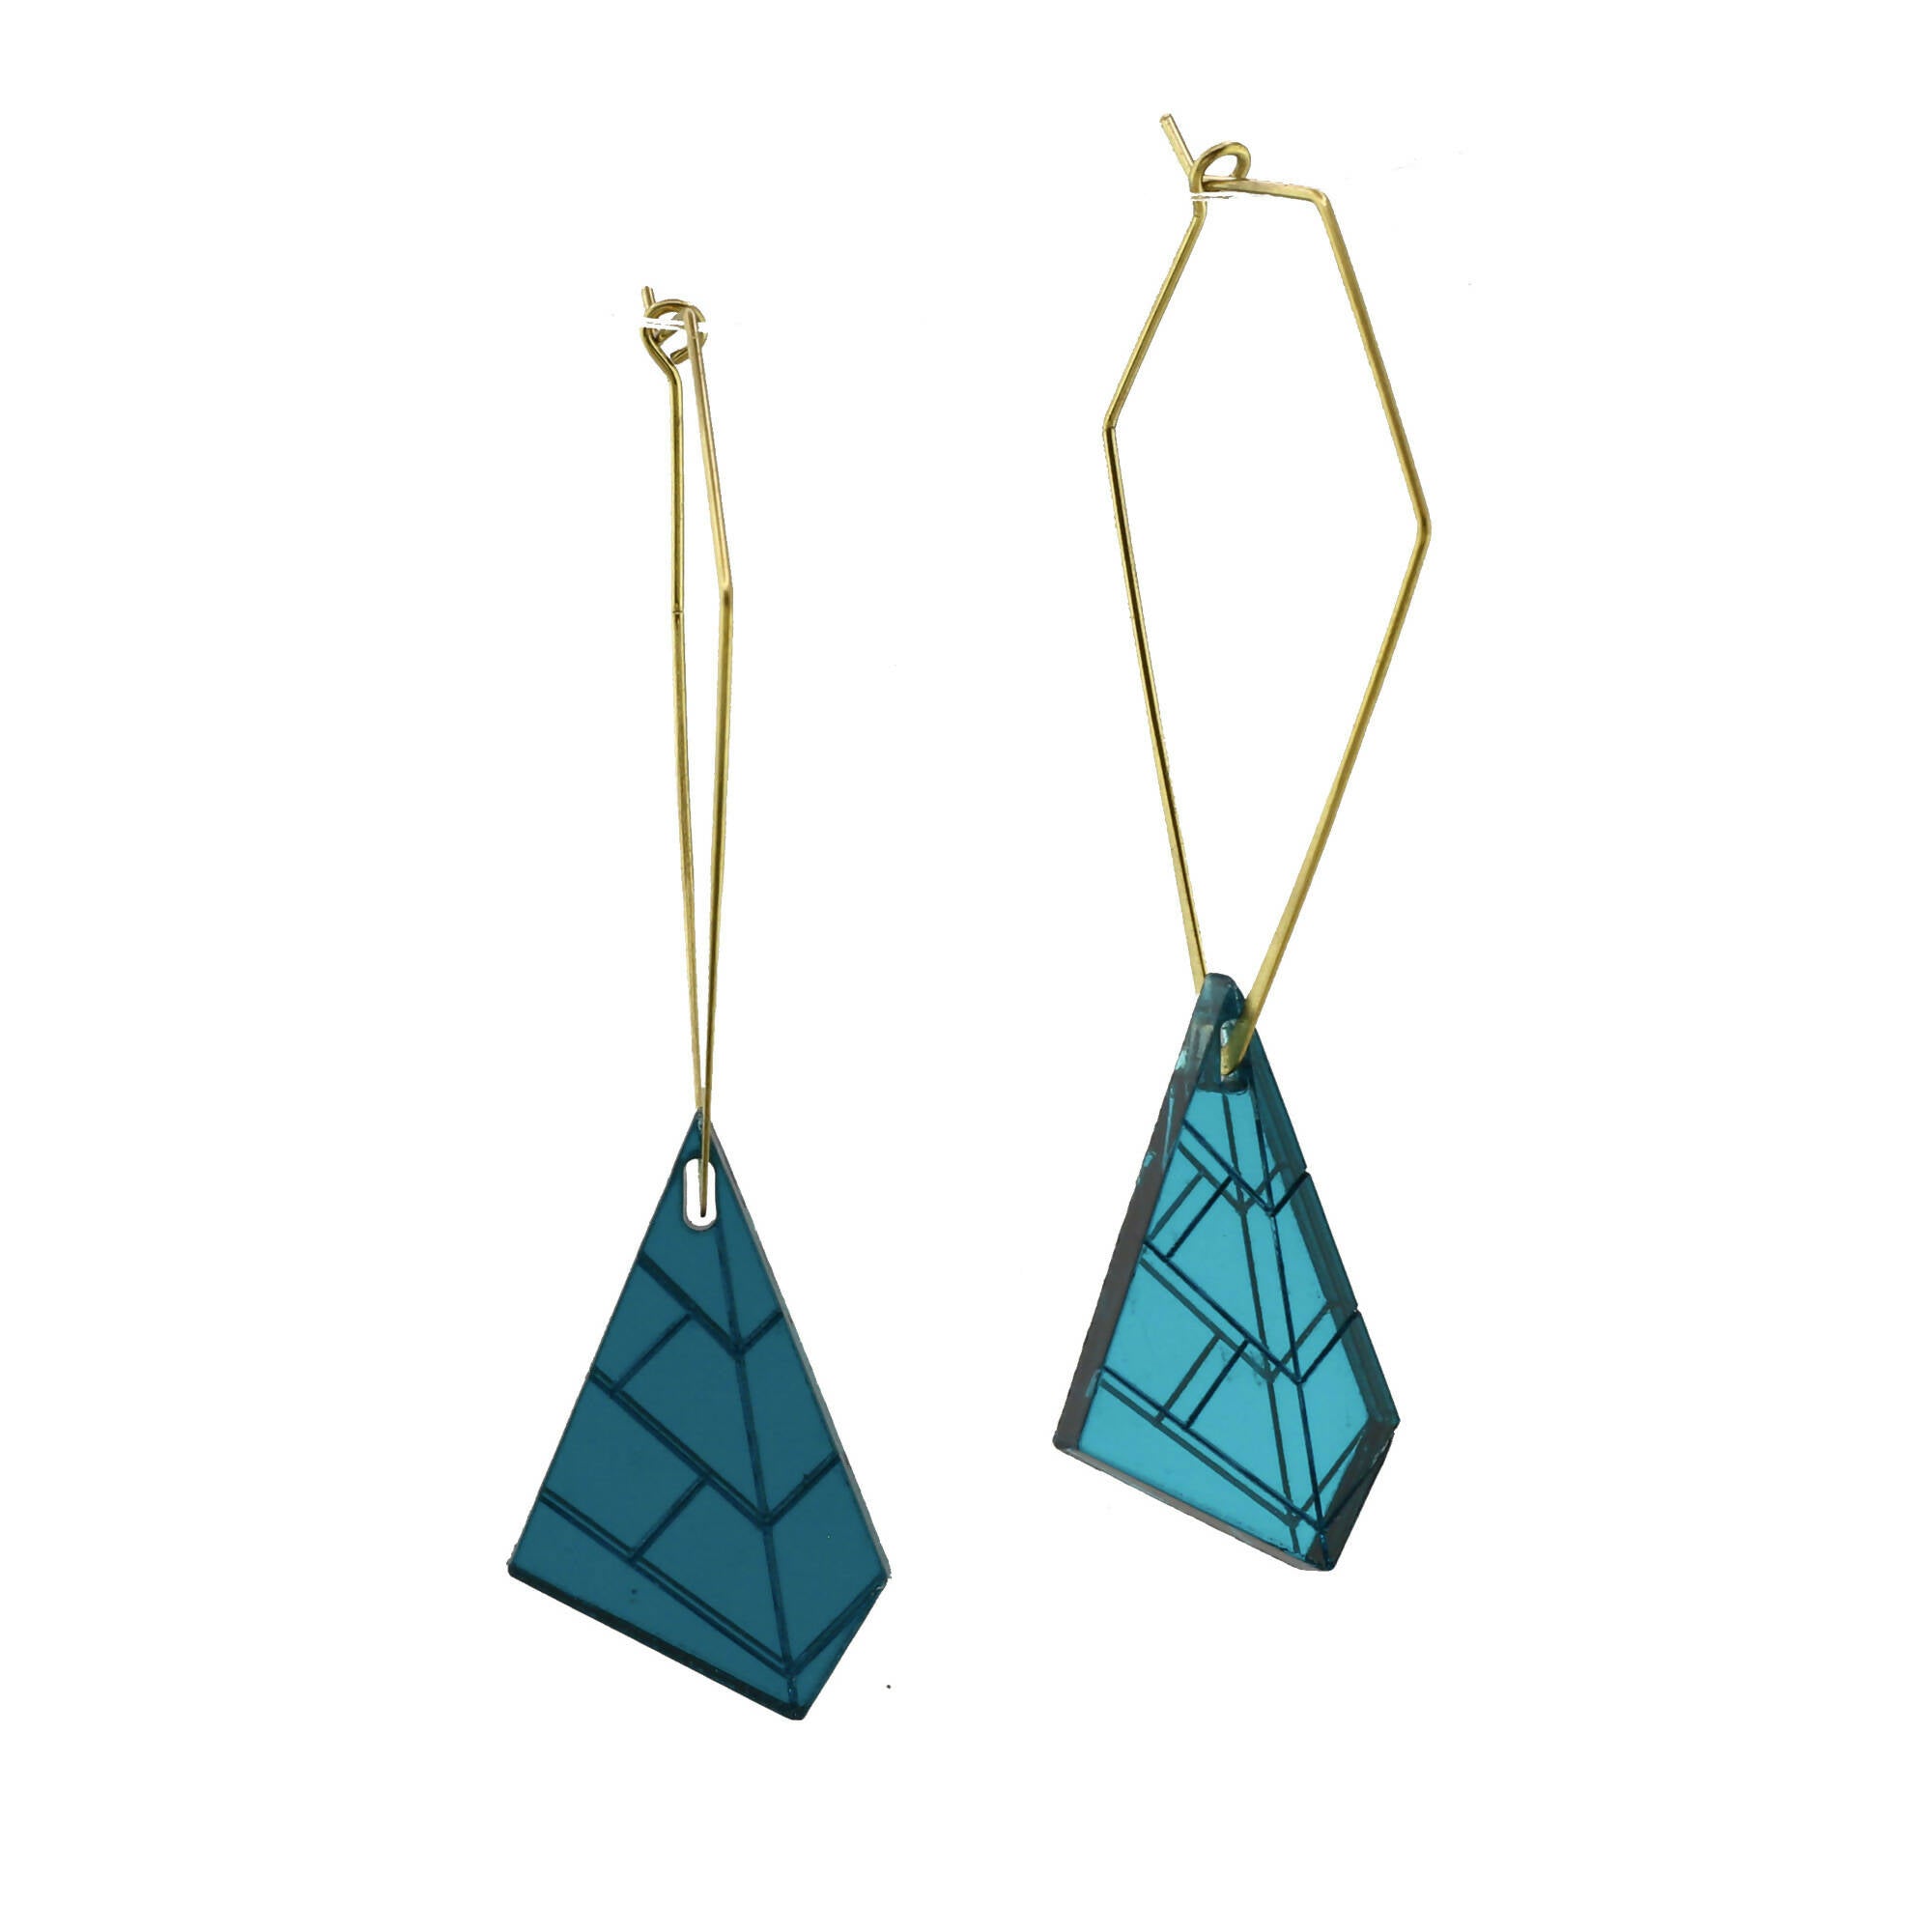 Kodes-acrylic-art-deco-earrings-blue-mirror-brass-KK0024d-0001-cut-out